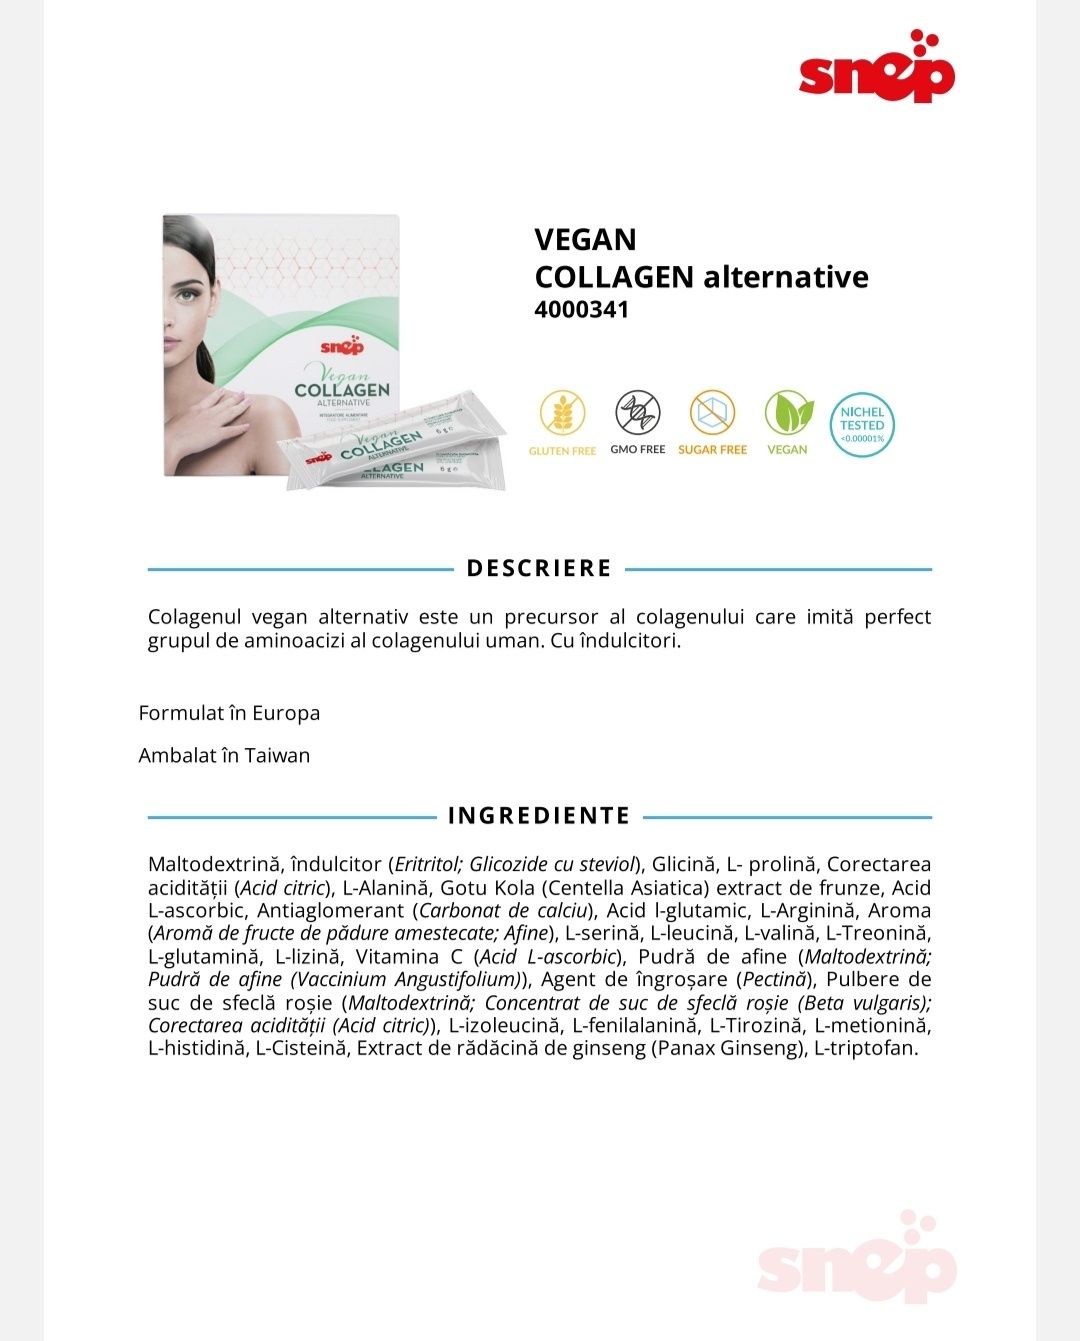 Collagen vegan Snep